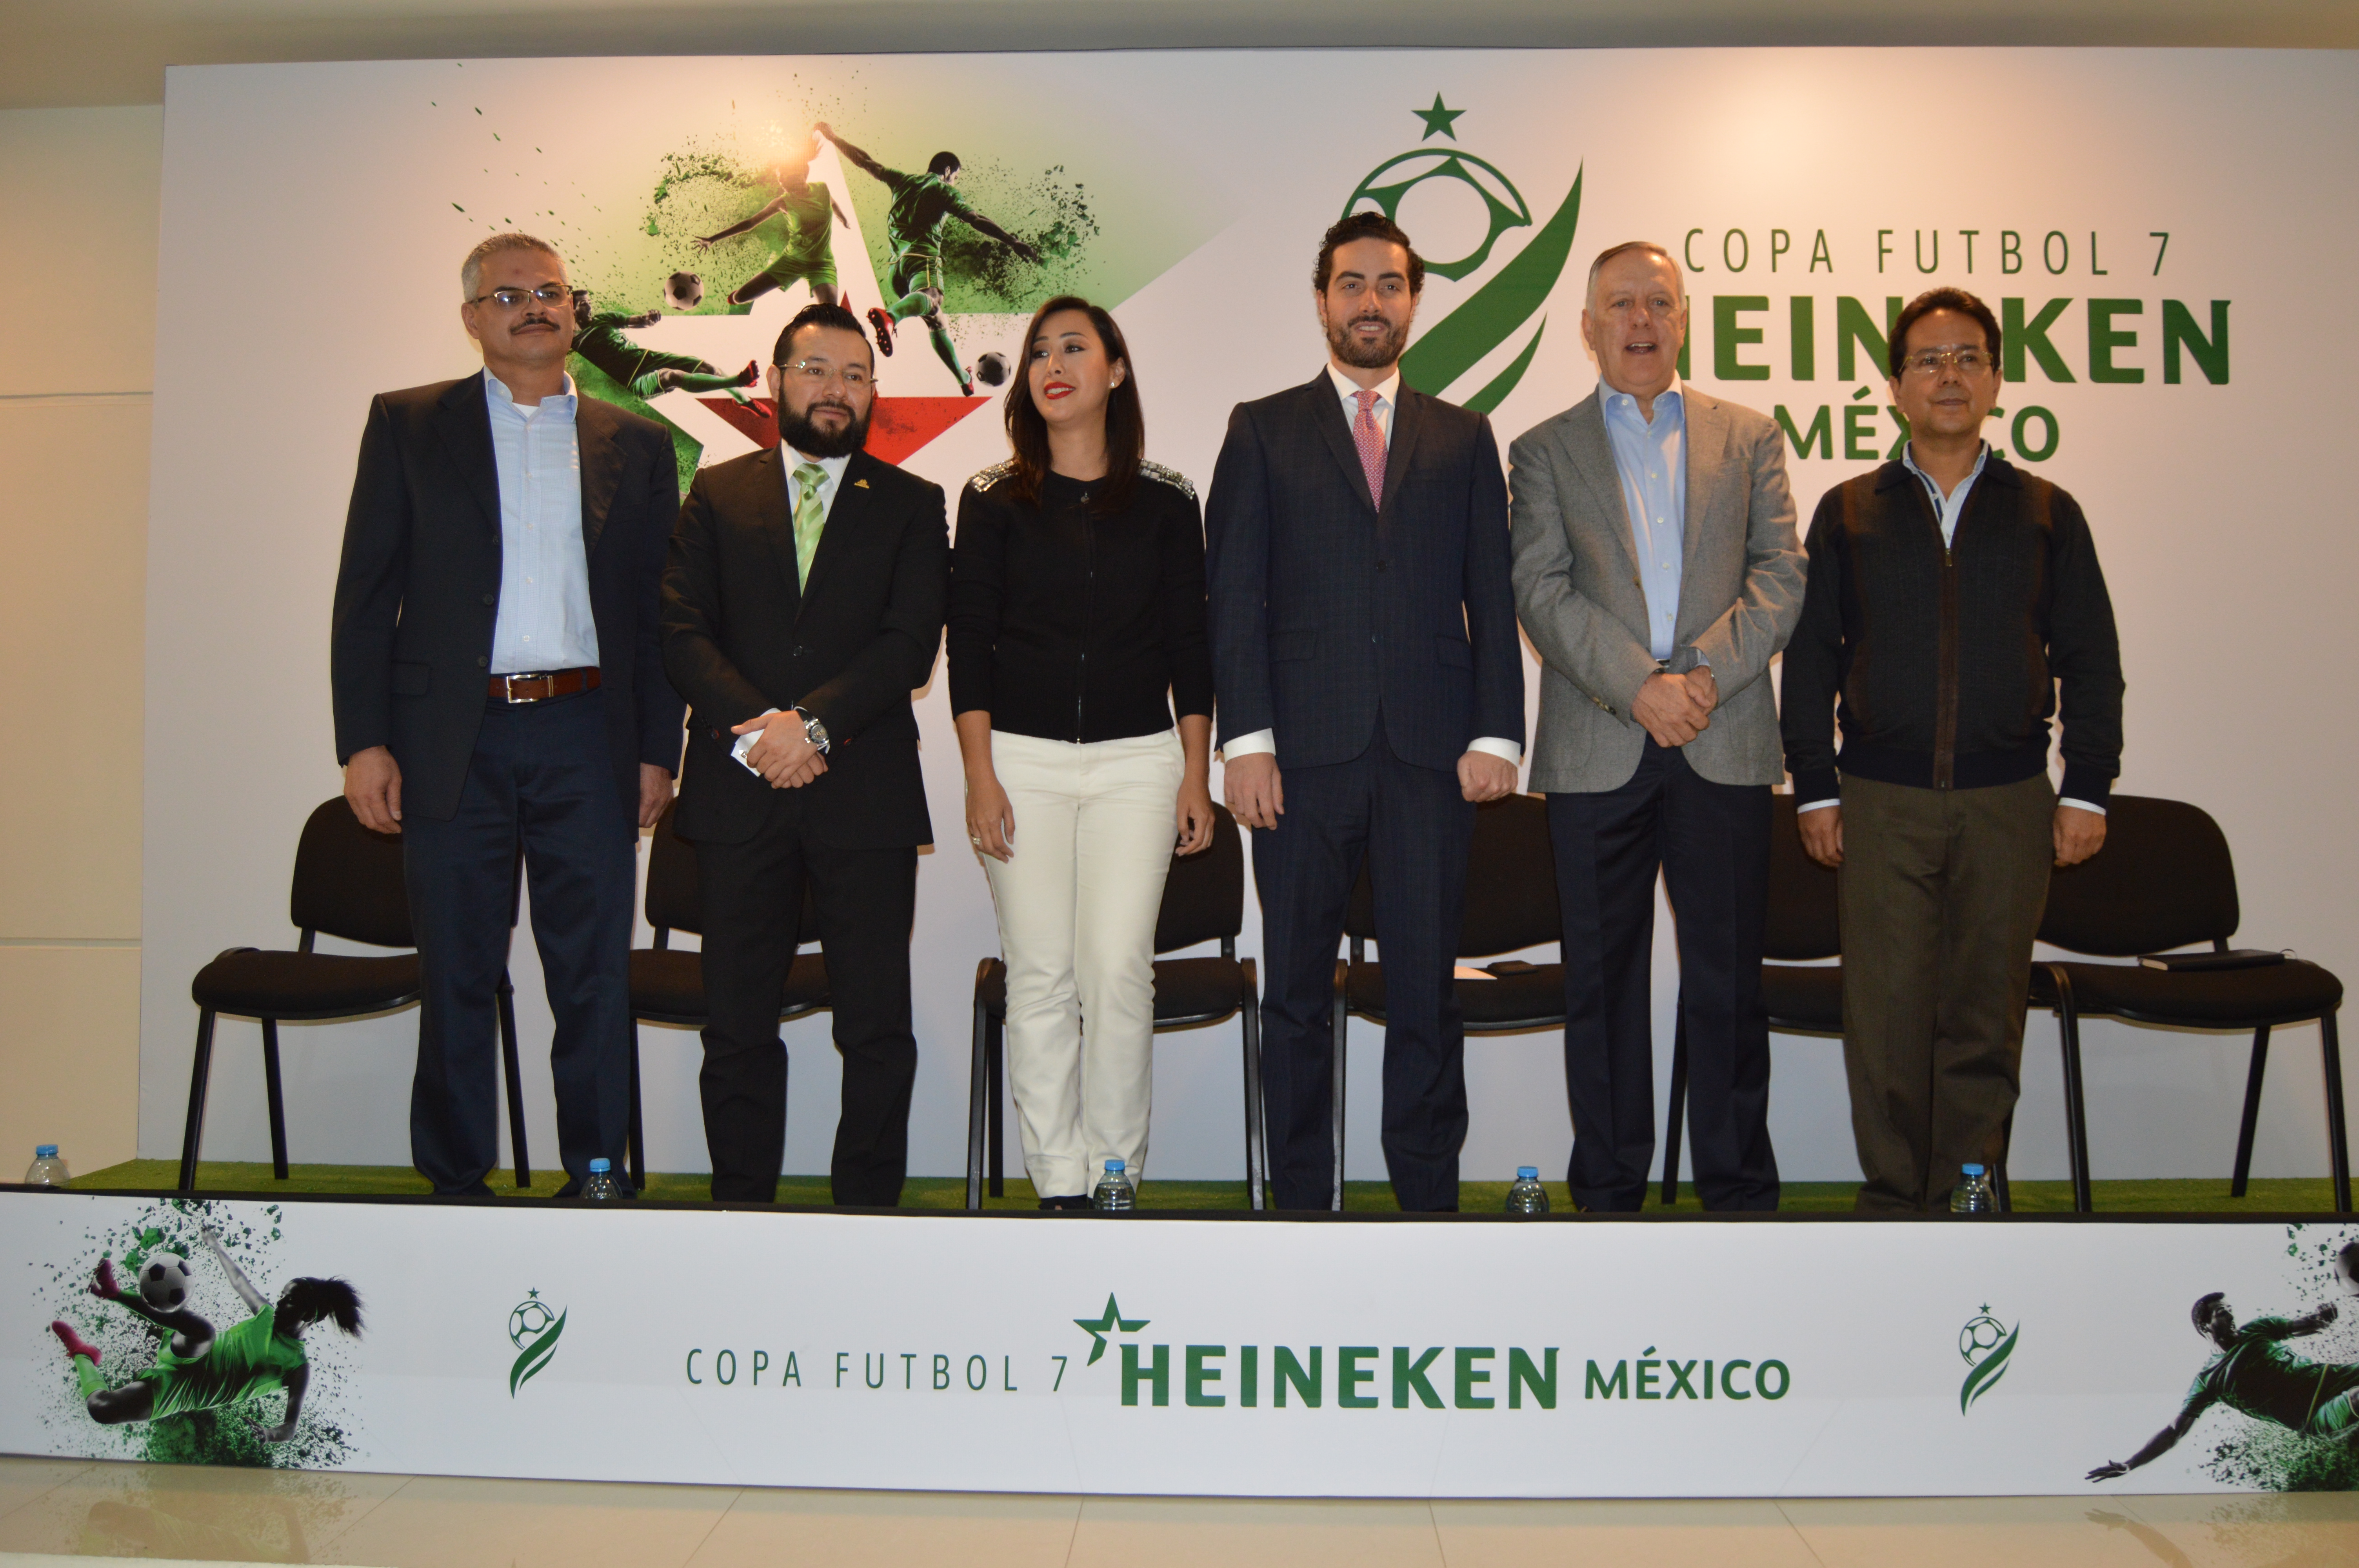 Se abre la convocatoria para la Copa Heineken México Futbol 7